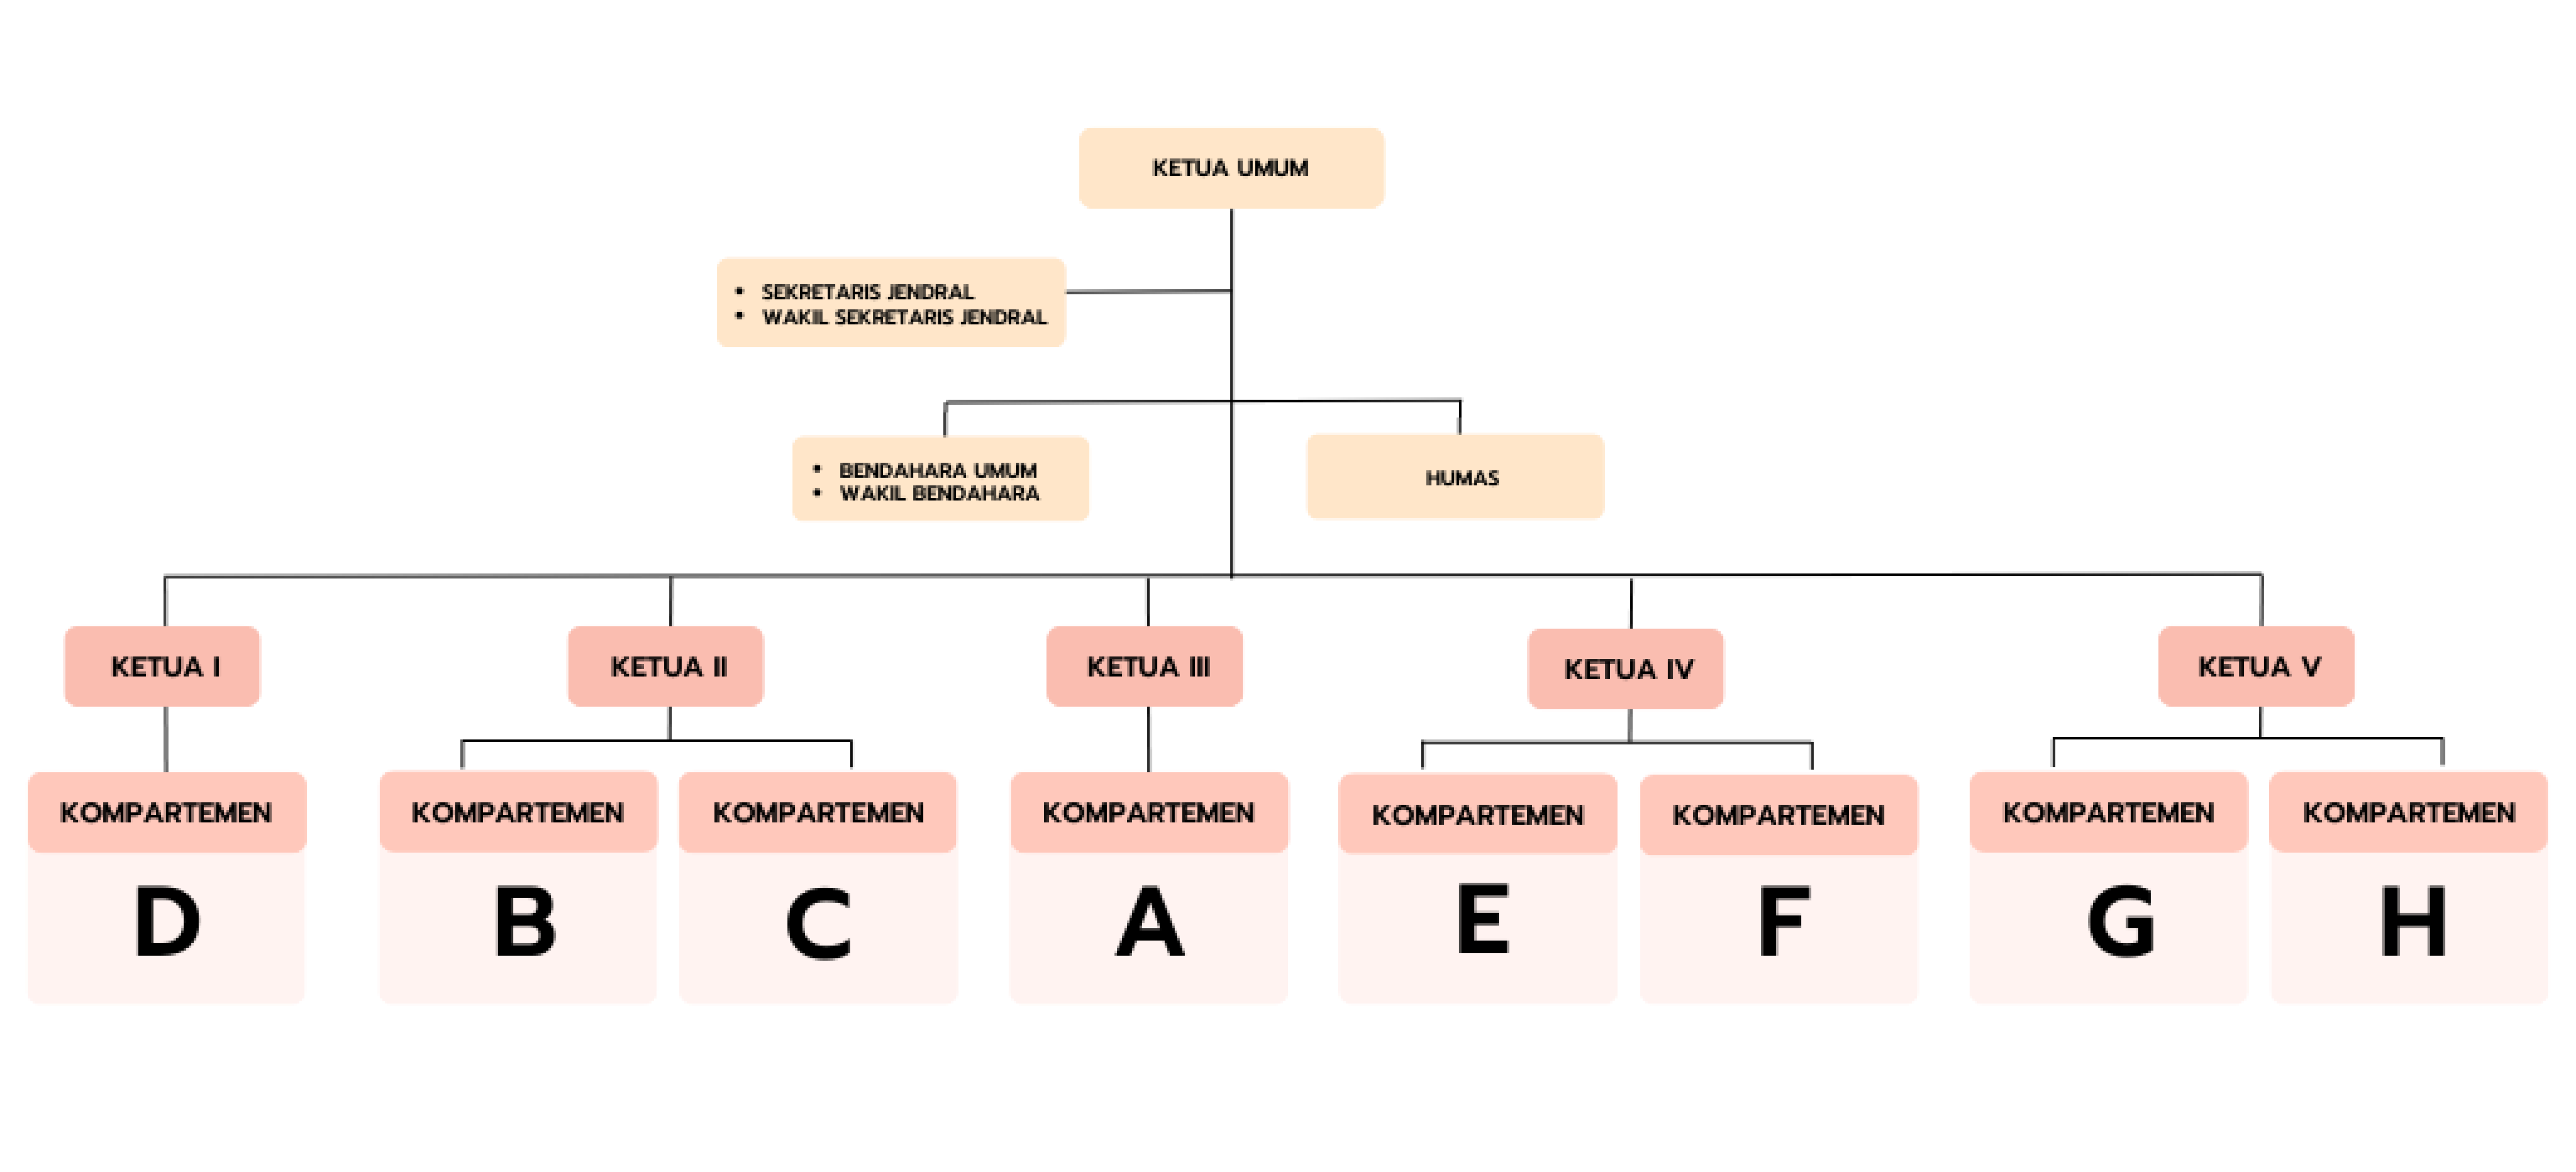 struktur organisasi himpsi